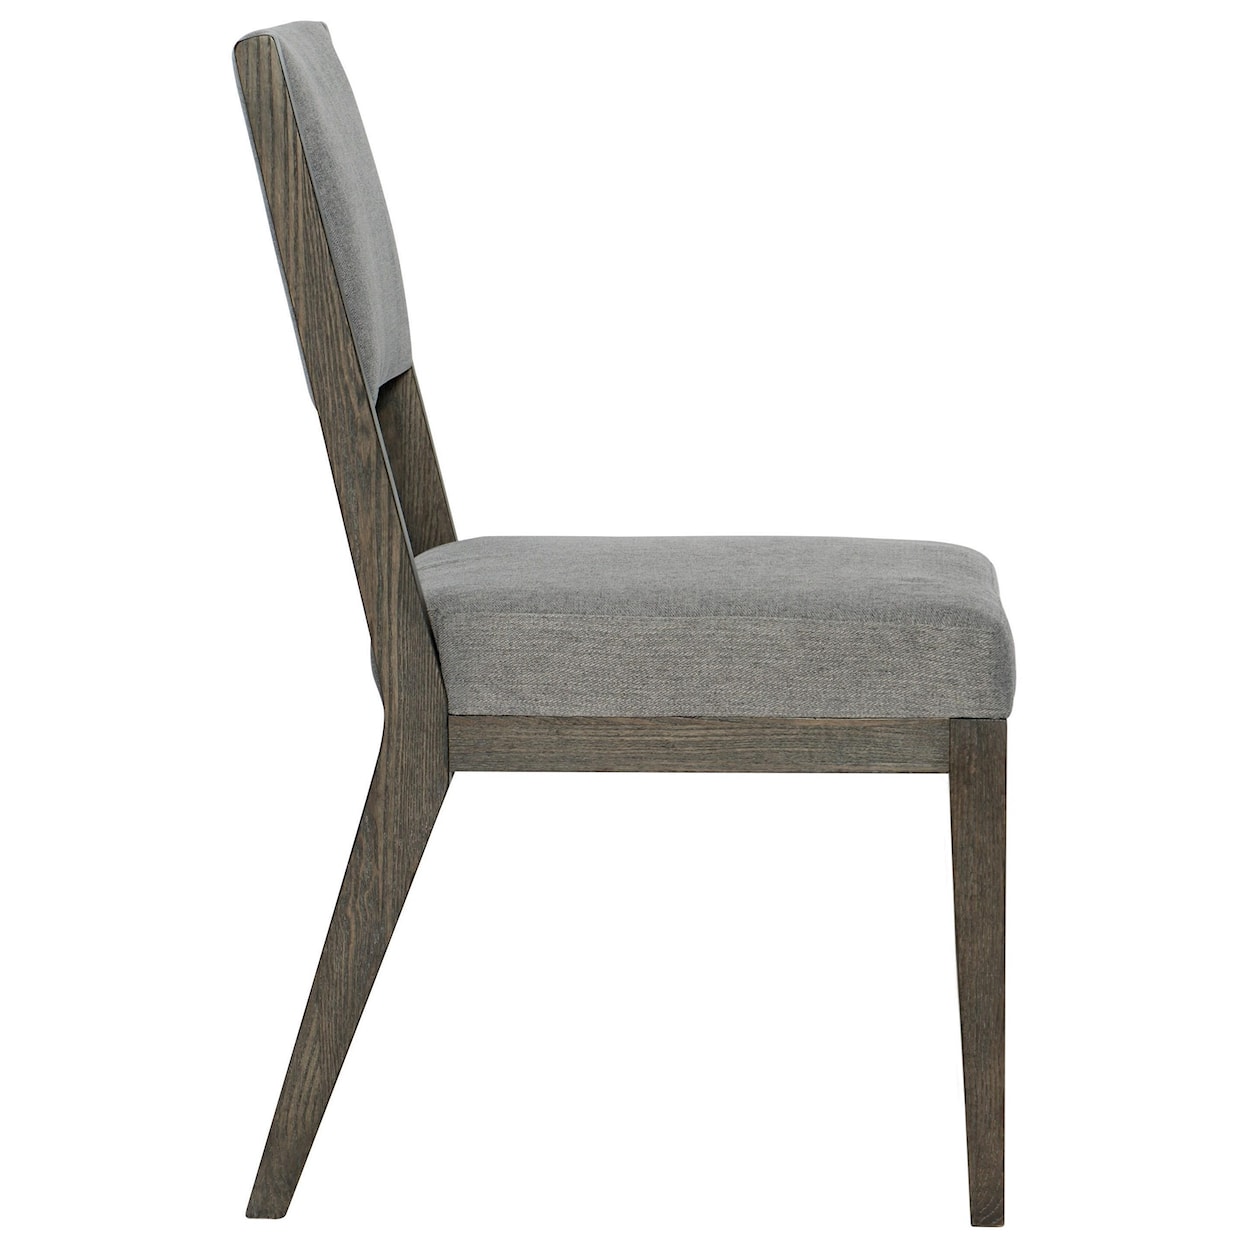 Bernhardt Linea Customizable Side Chair